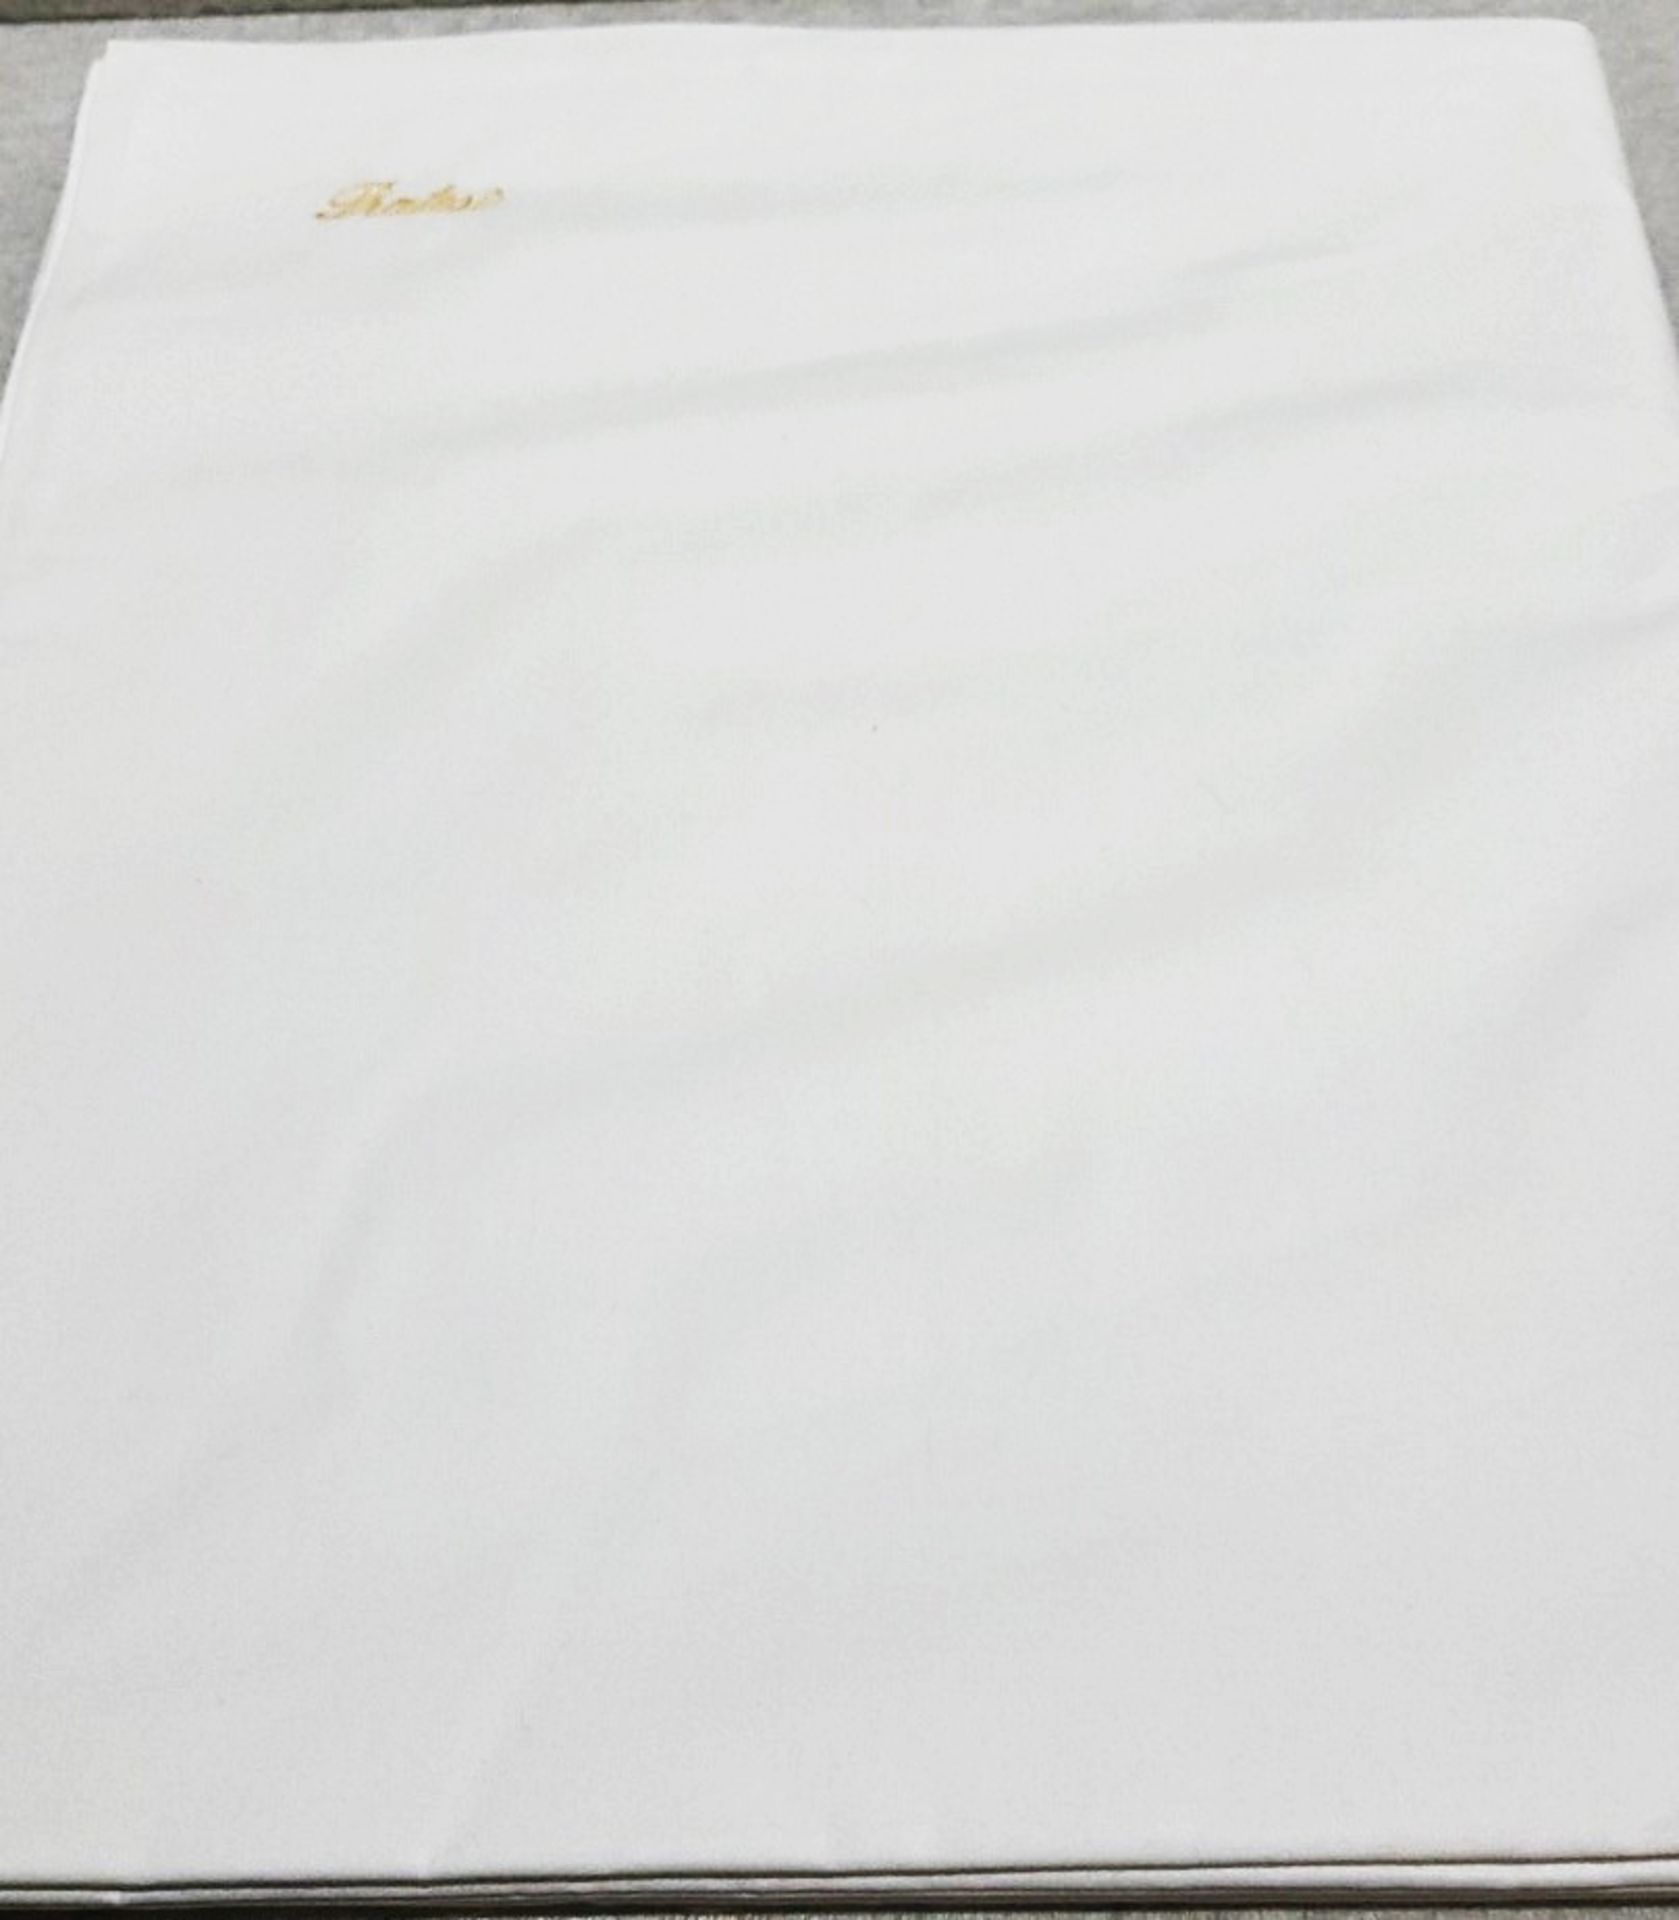 4-Piece PRATESI 'Tre Riche' Gold Embroidered Angel Skin Cotton Sheet & Pillow Set - Original - Image 5 of 5